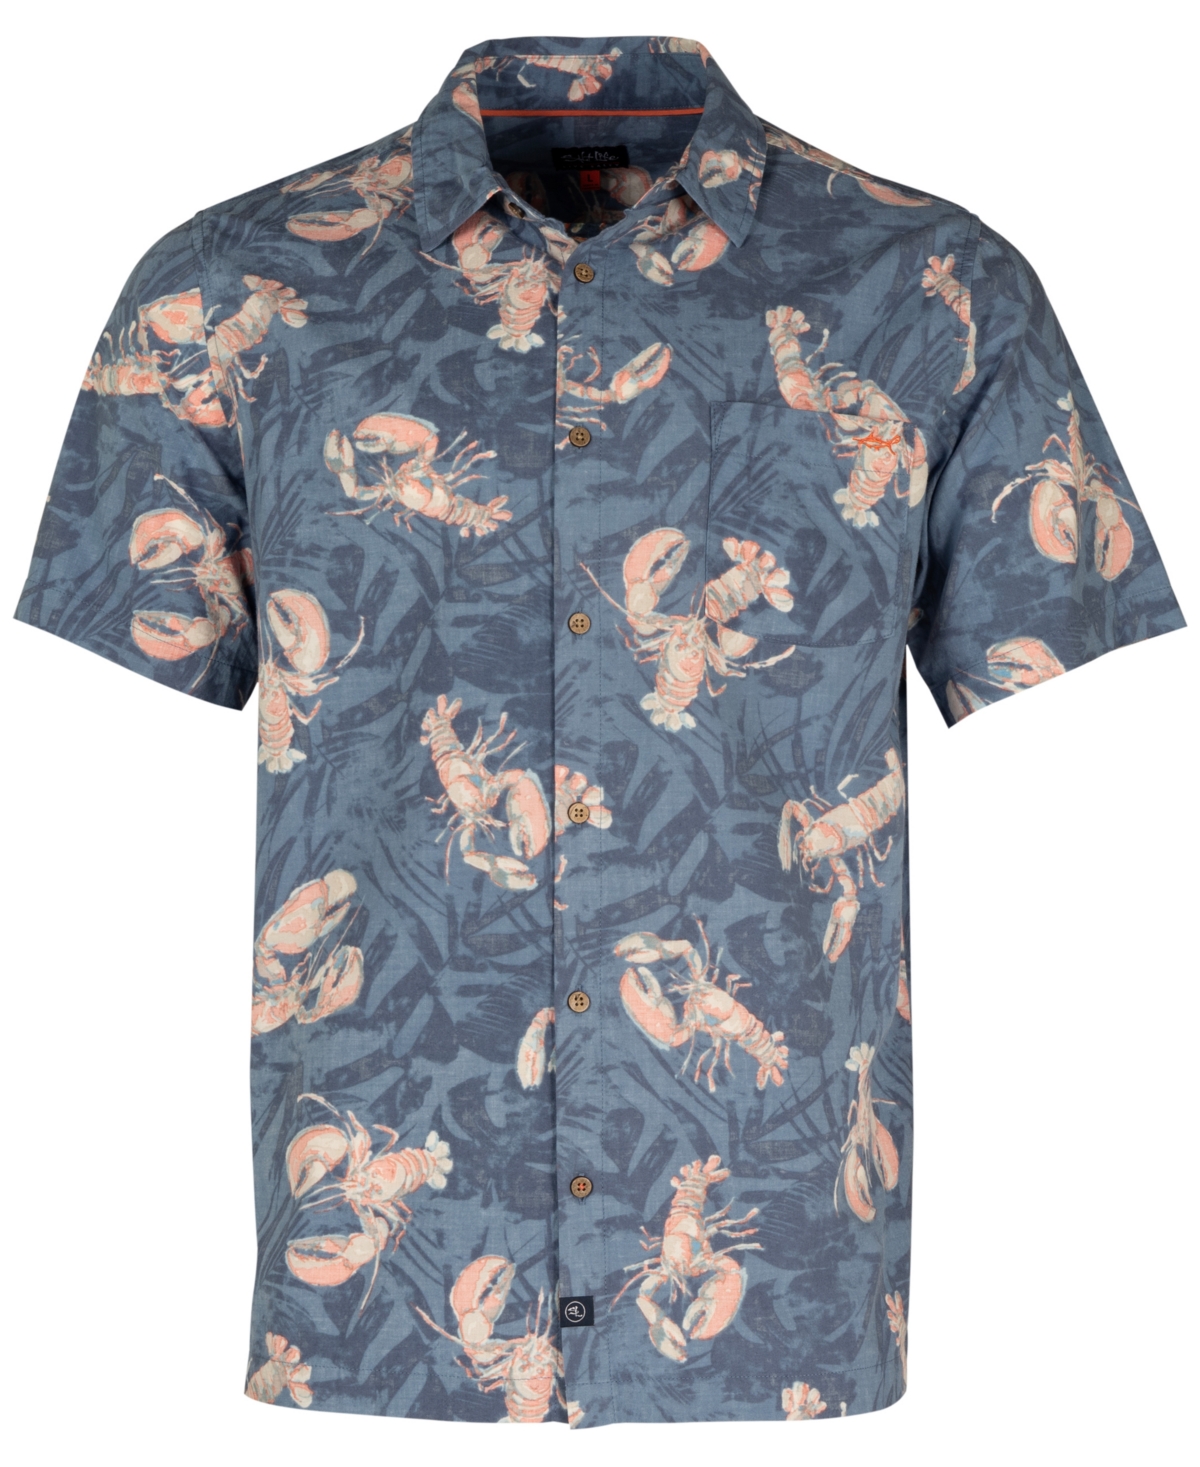 Men's Rock Lobster Graphic Print Short-Sleeve Button-Up Shirt - Elemental Blue